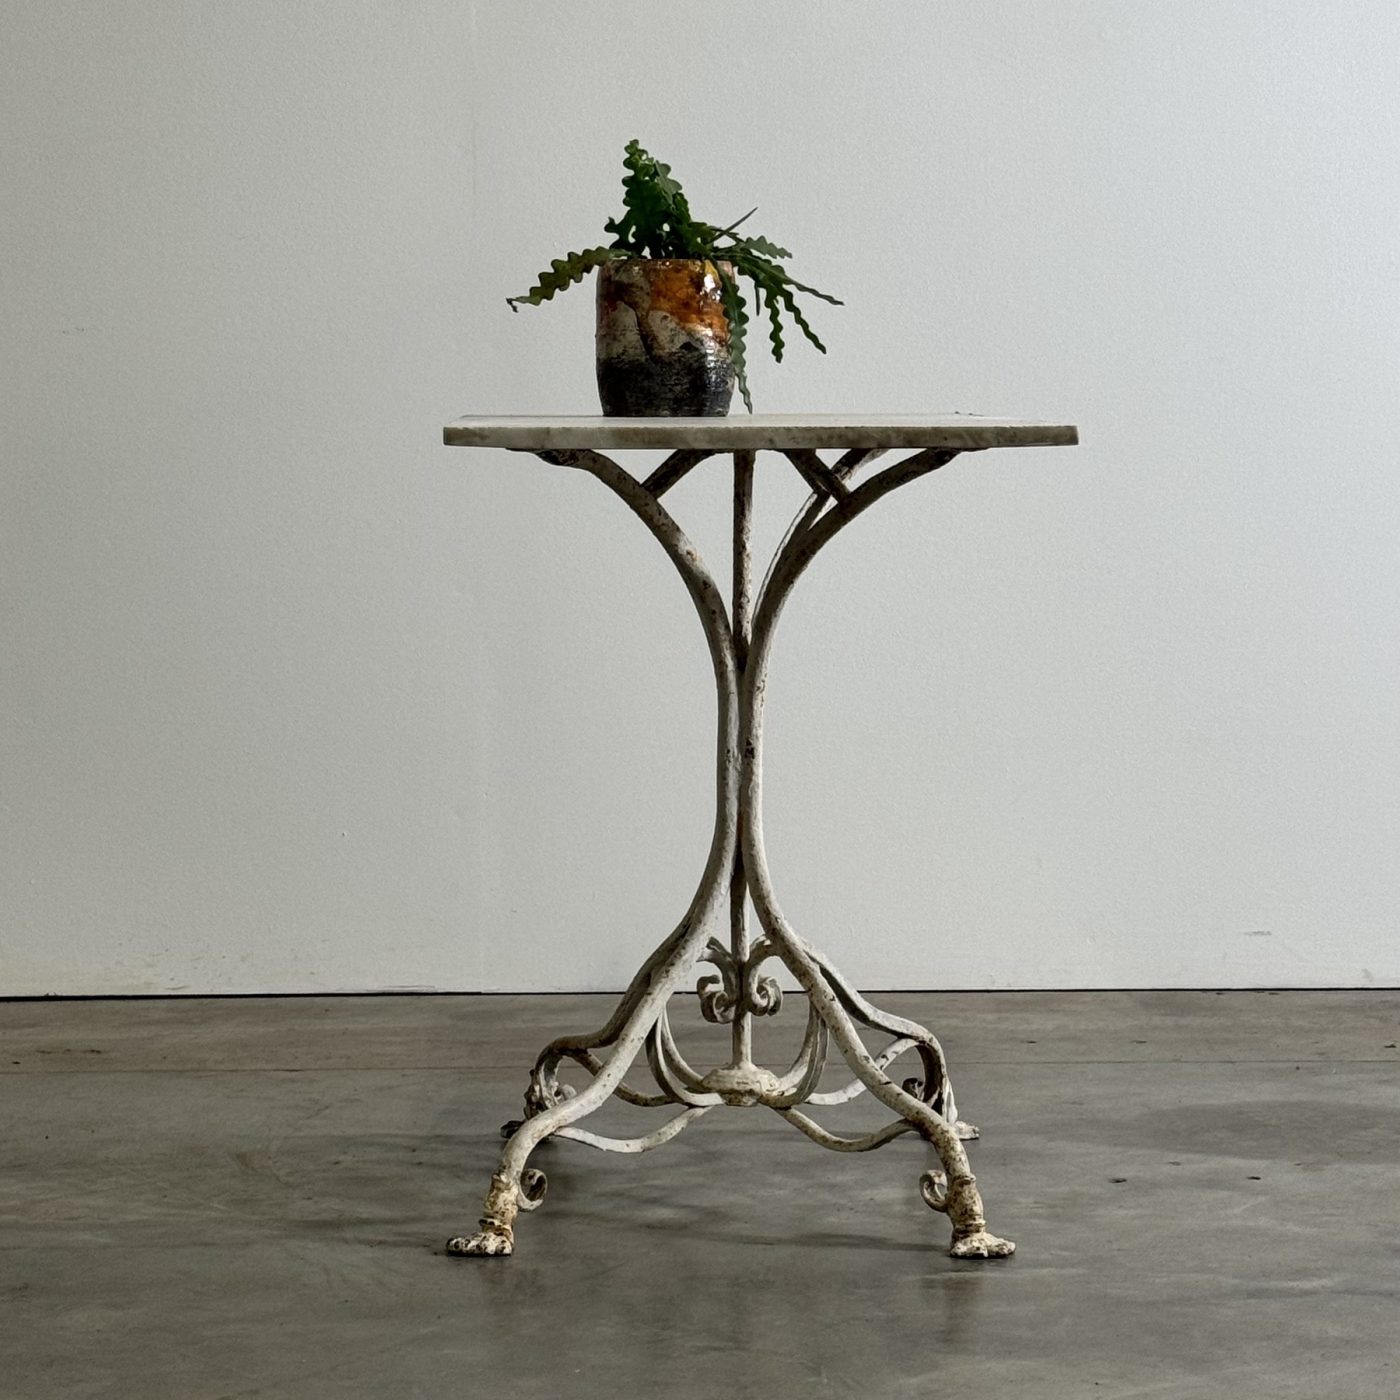 objet-vagabond-garden-table0004